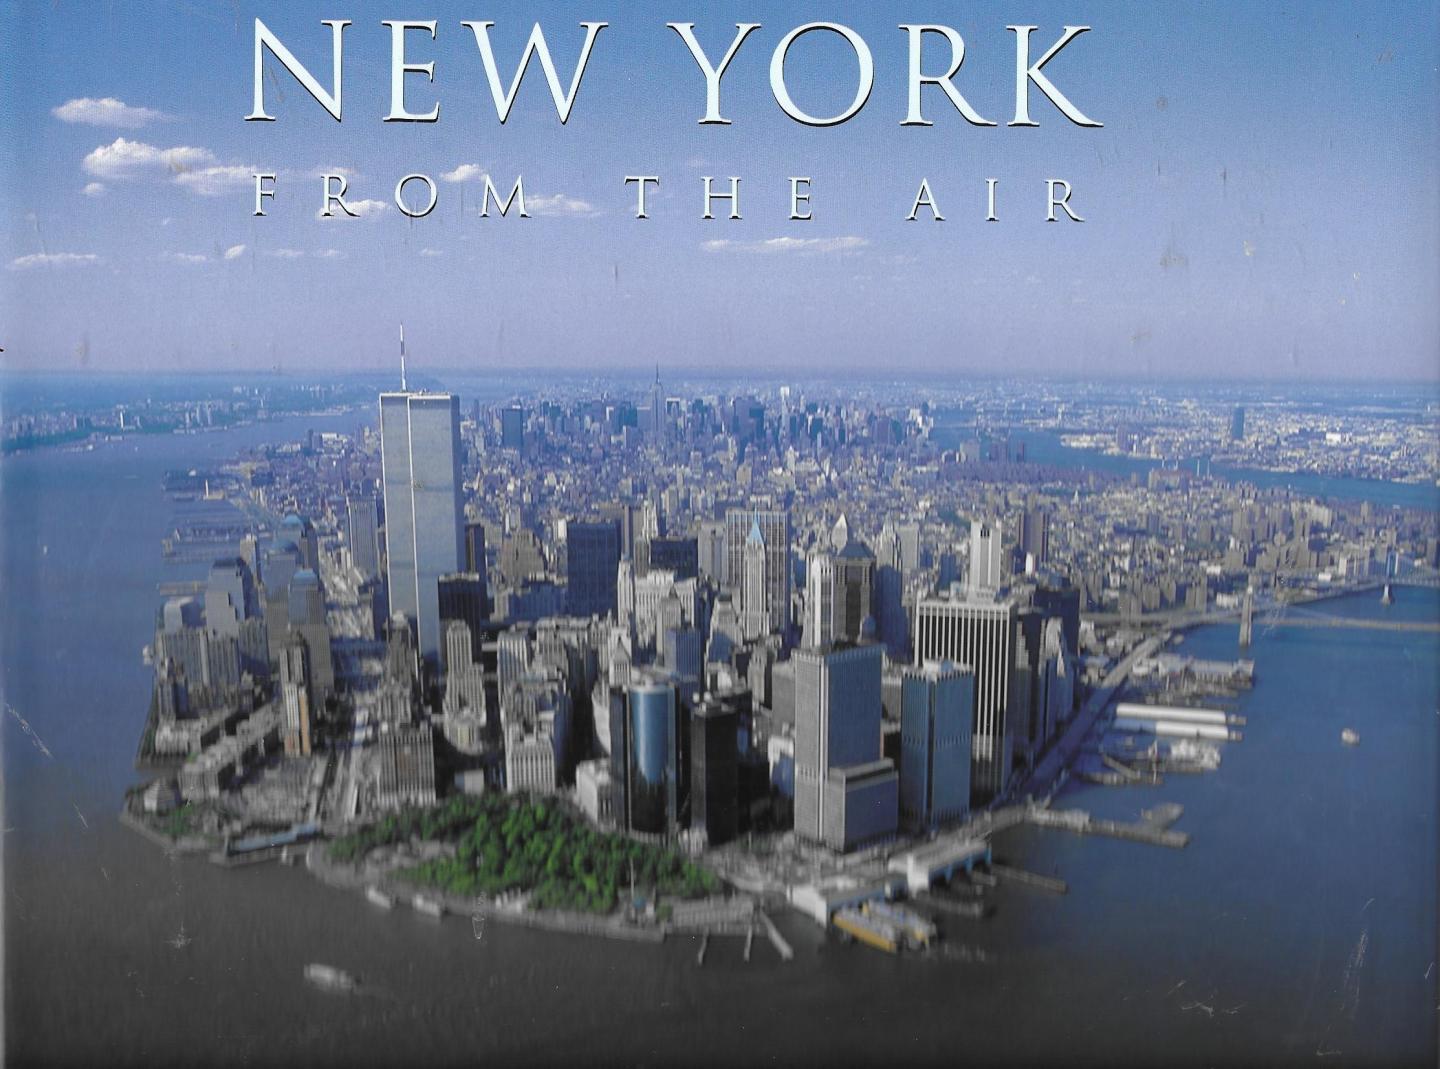 Padgett, Joann - New York from the air